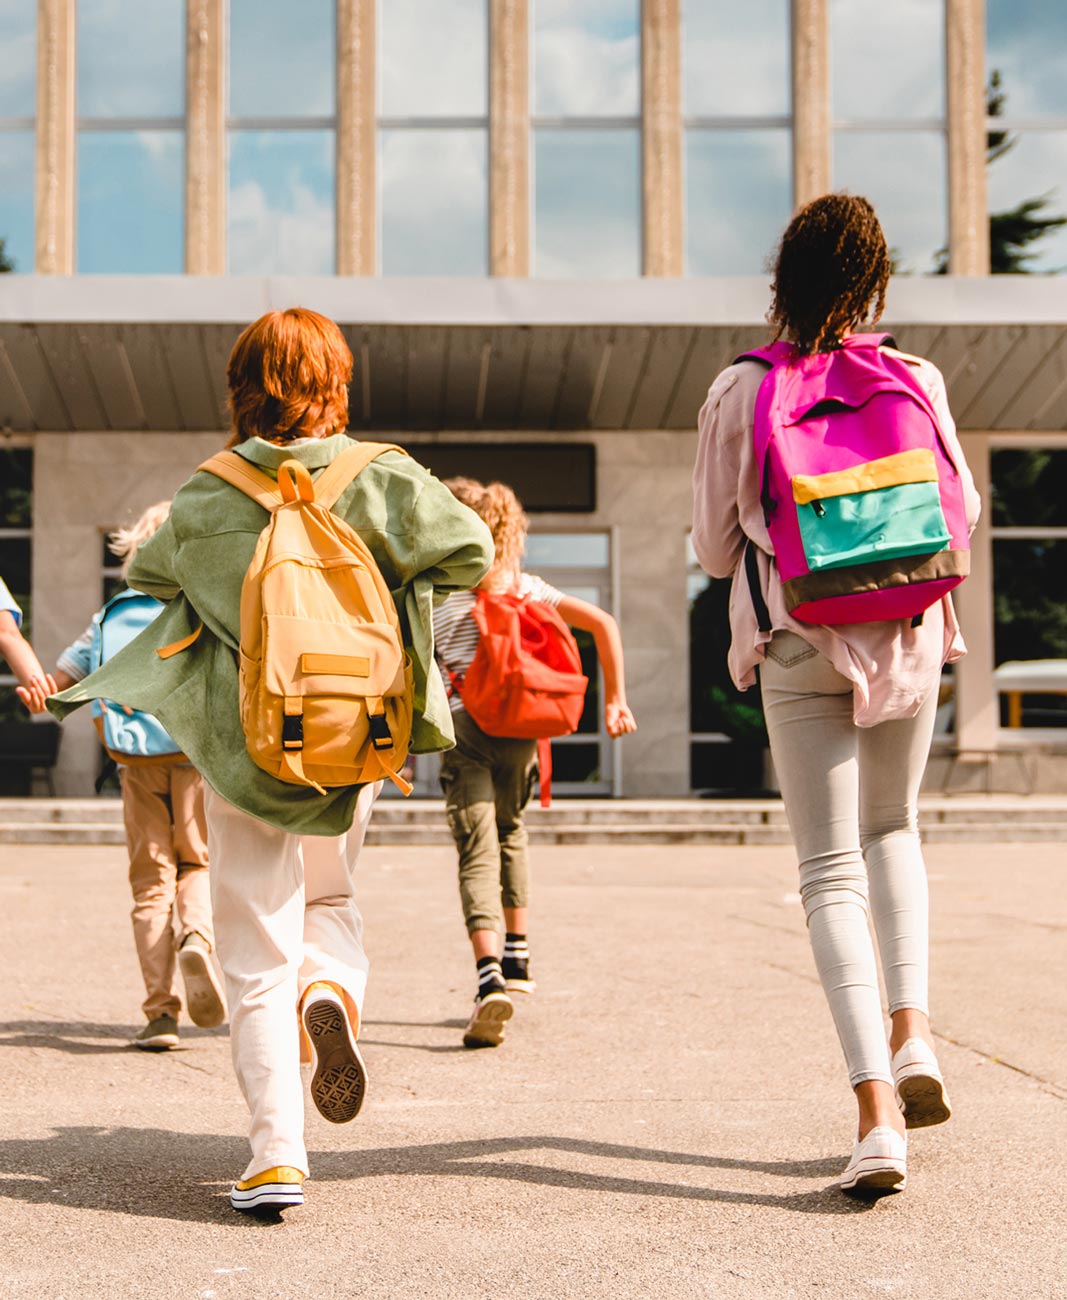 children wearing back packs run towards a school entrance